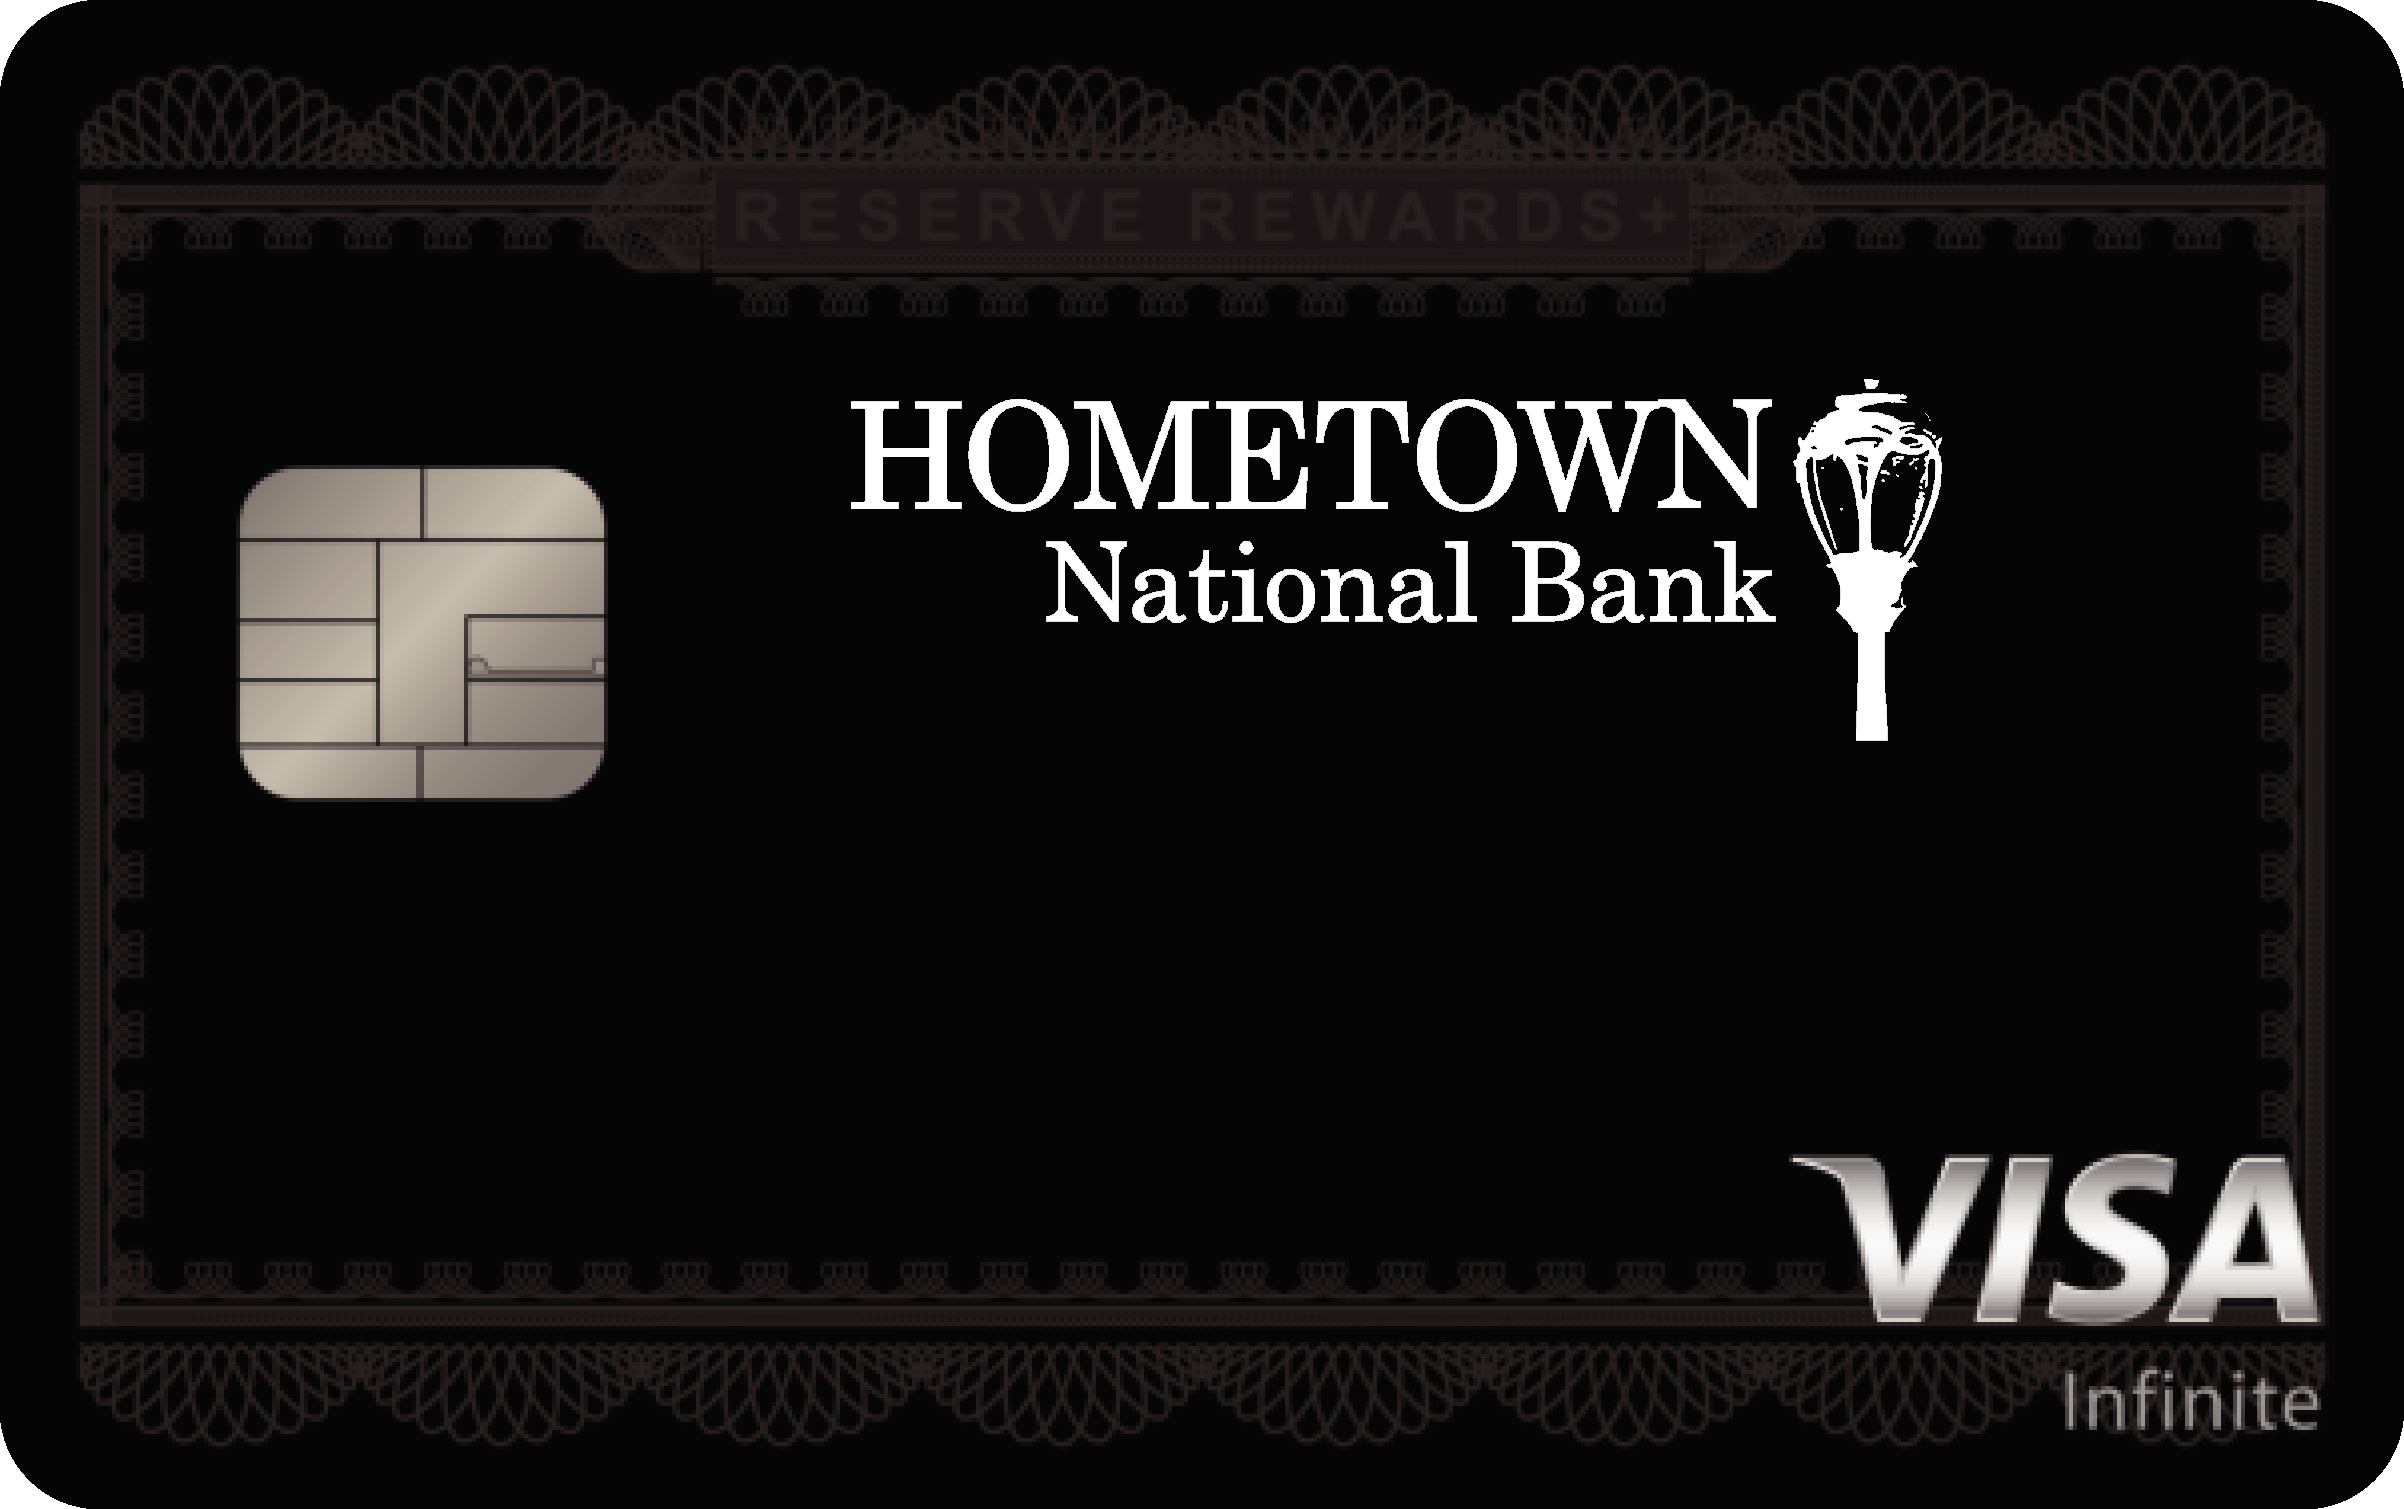 Hometown National Bank